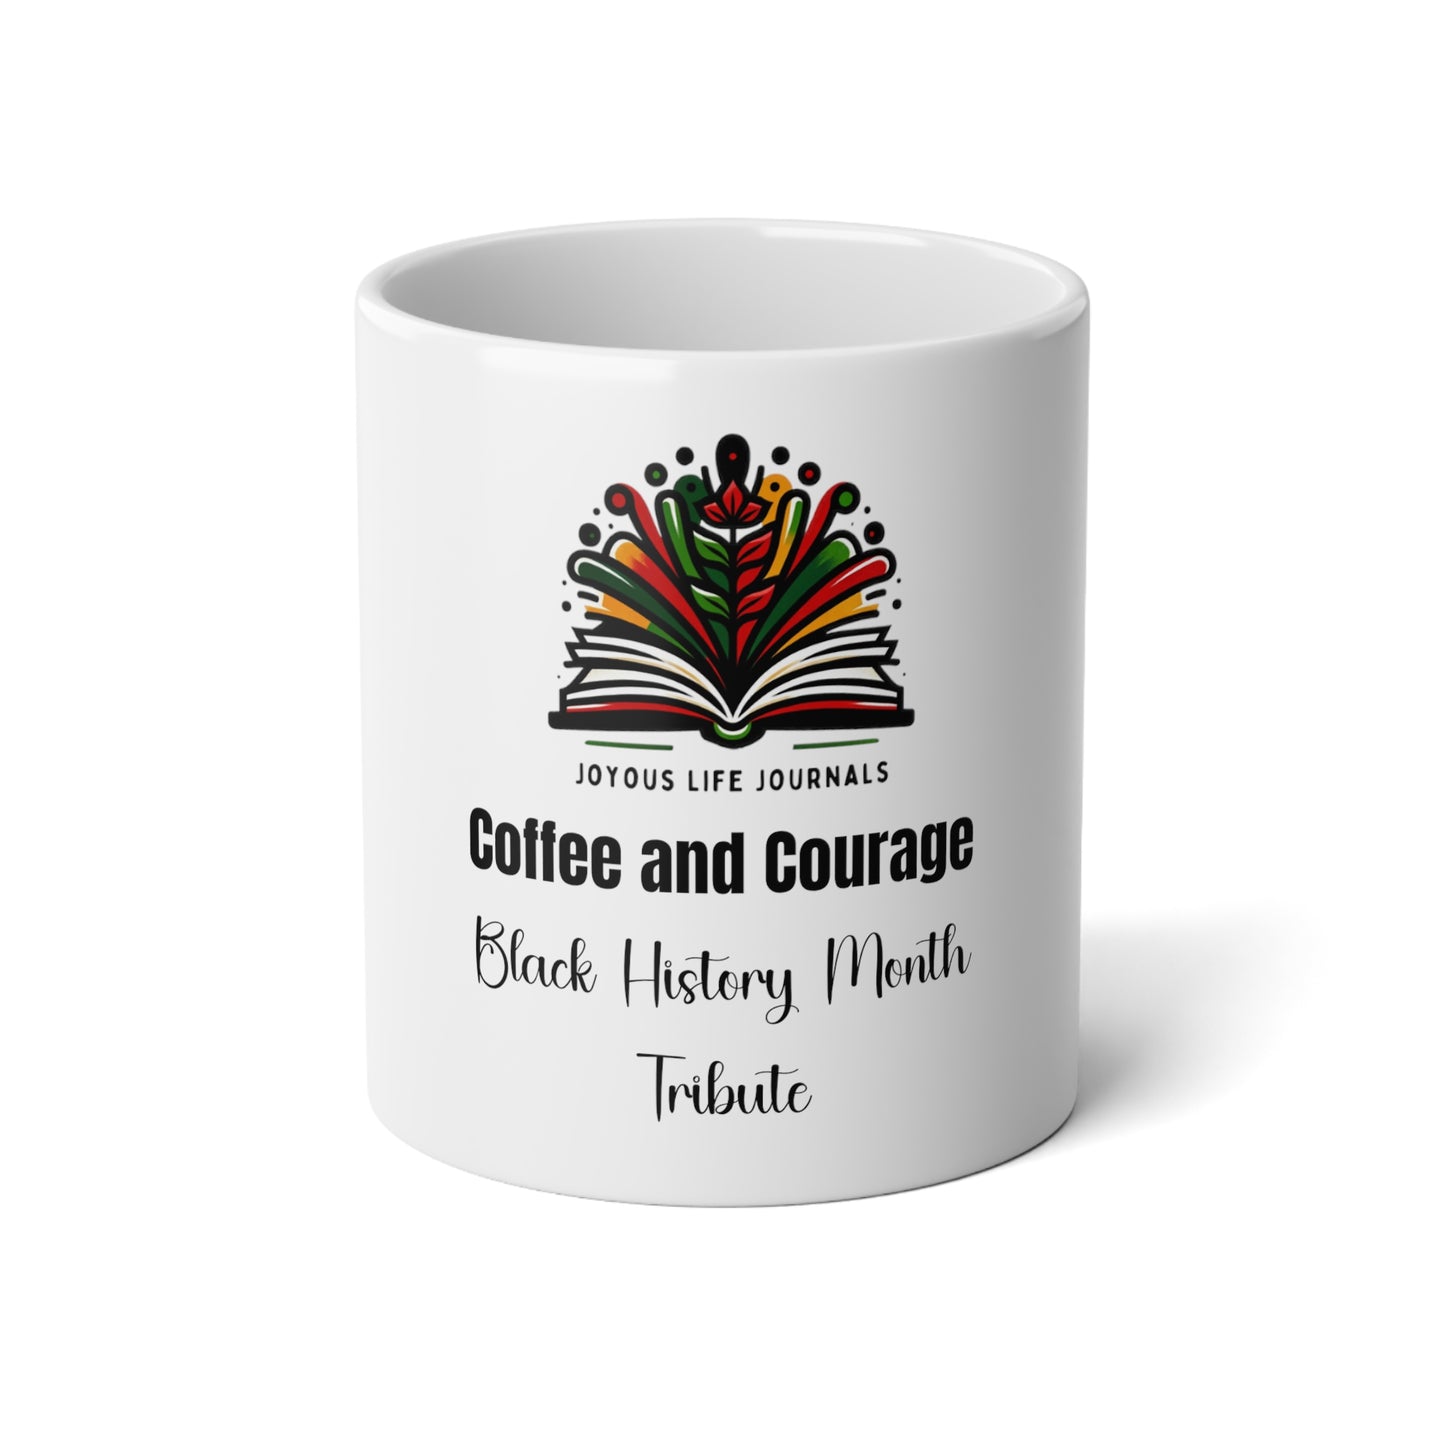 Coffee and Courage: Black History Month Tribute Jumbo Mug, Joyous Life Journals